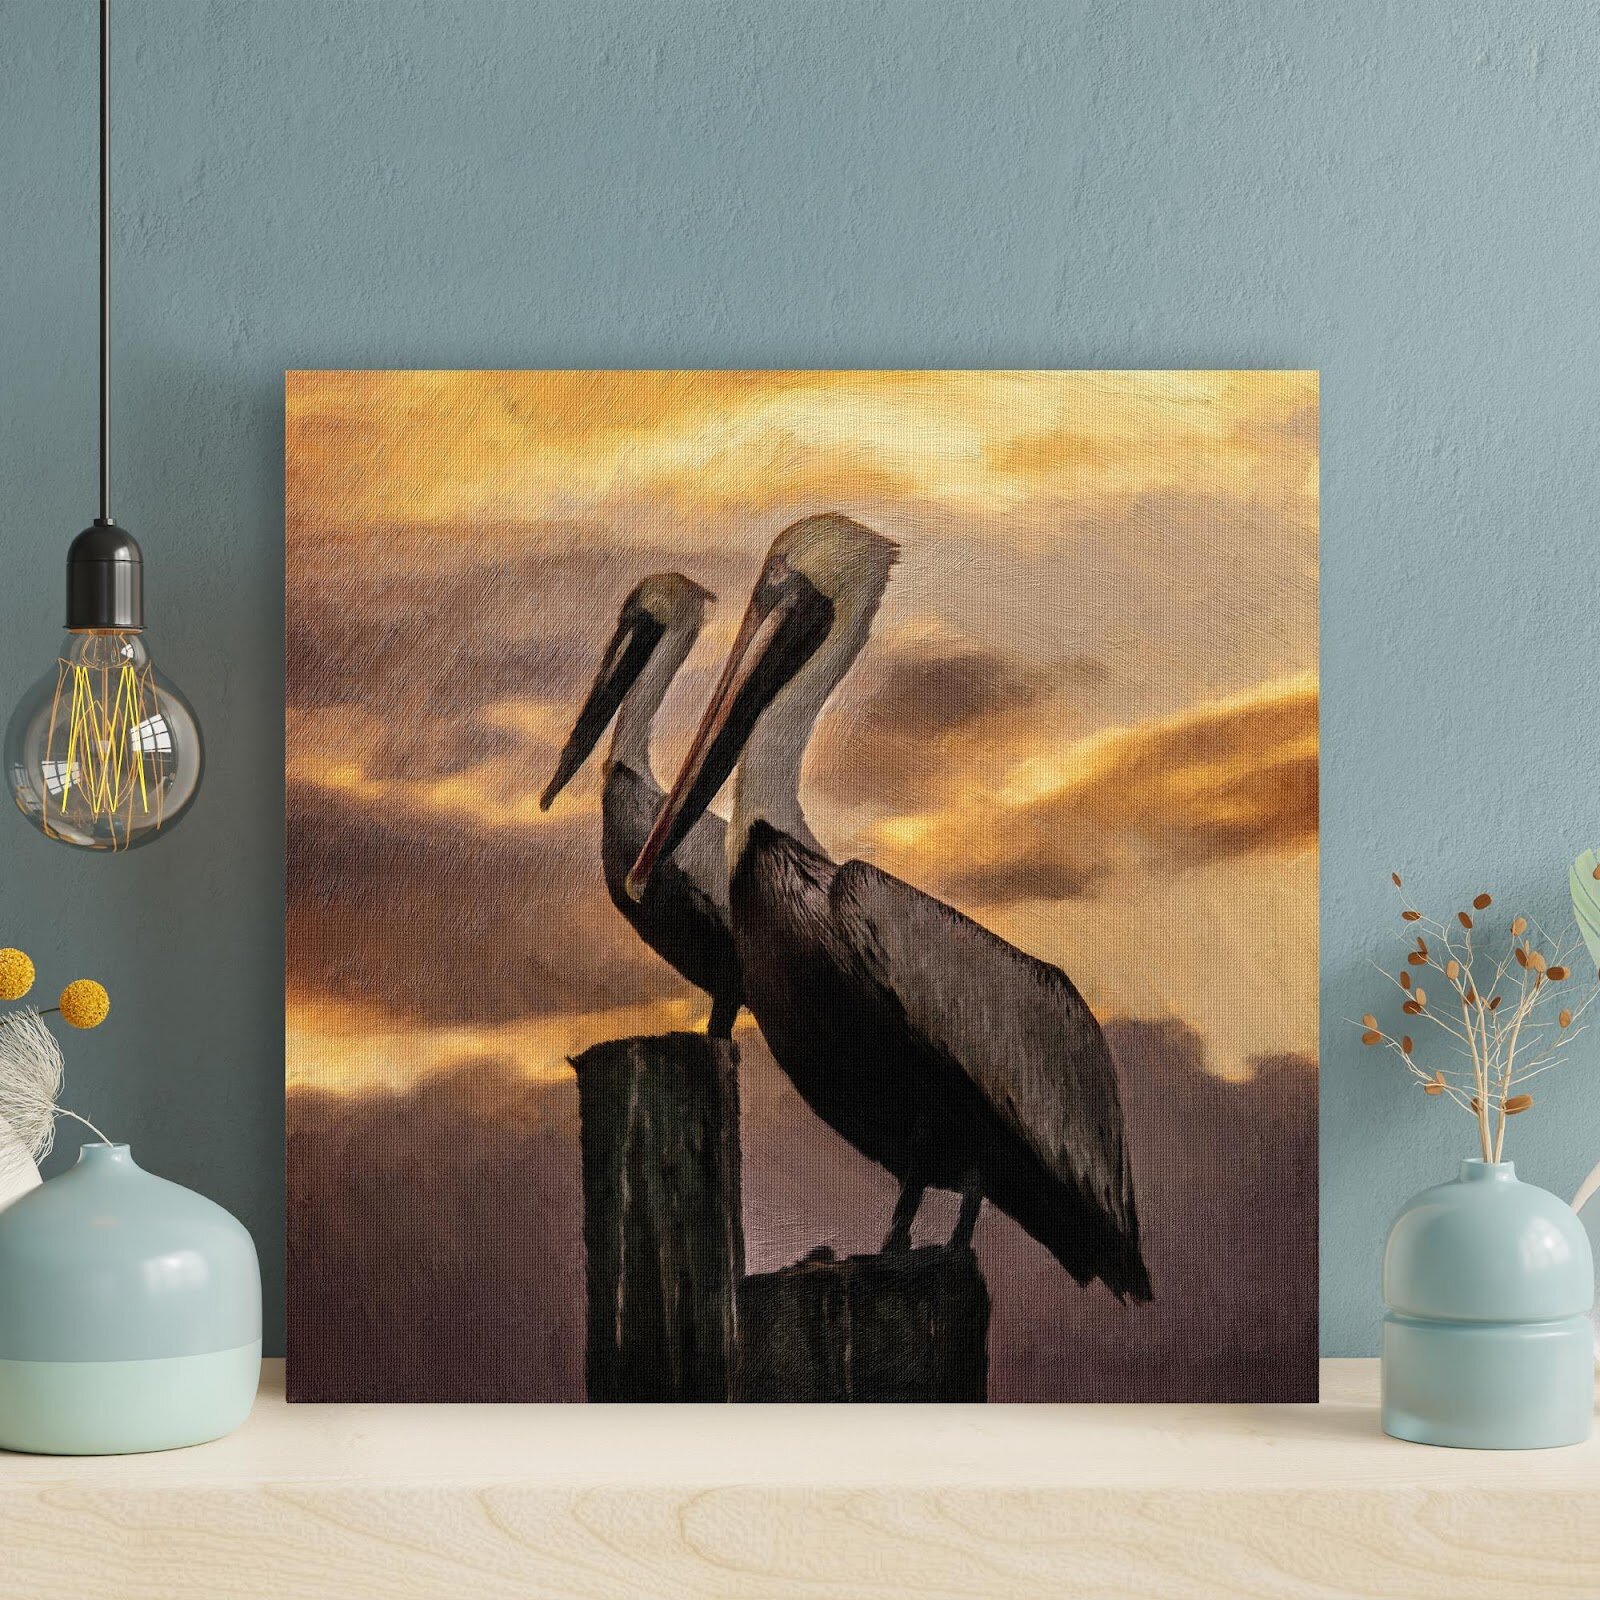 FREE SHIPPING - Rustic Modern Glassware - The Rustic Pelican